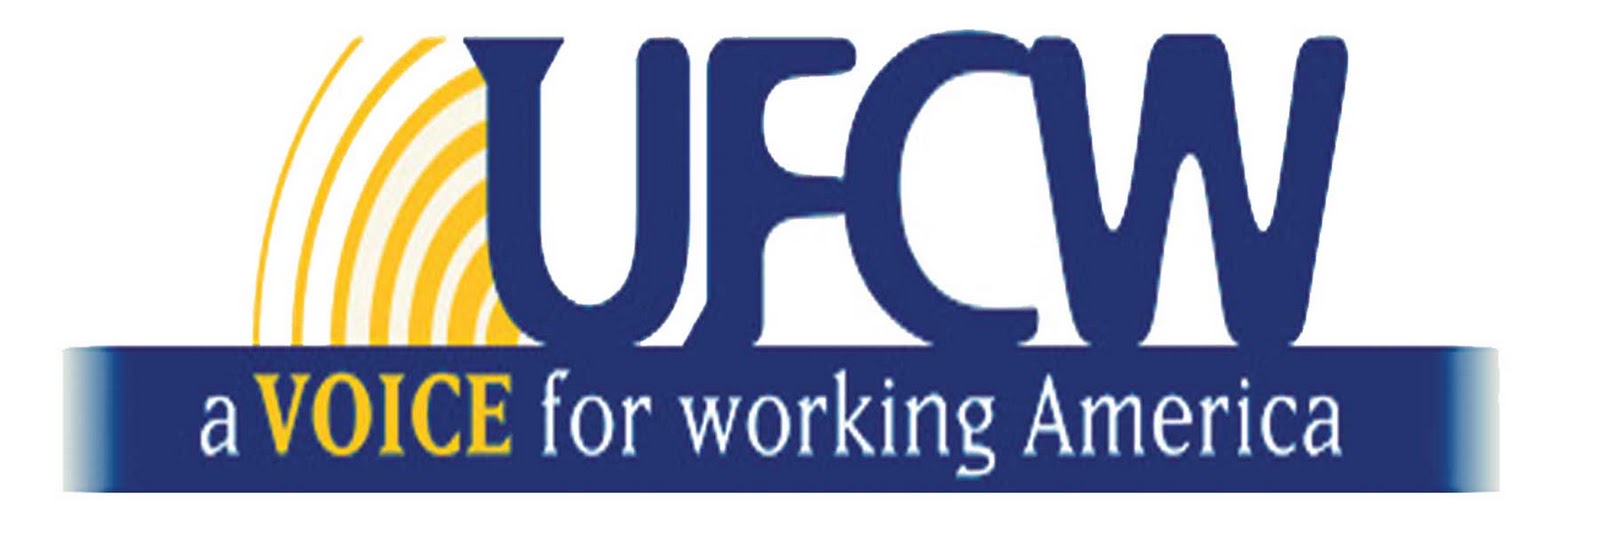 UFCW Logo photo - 1